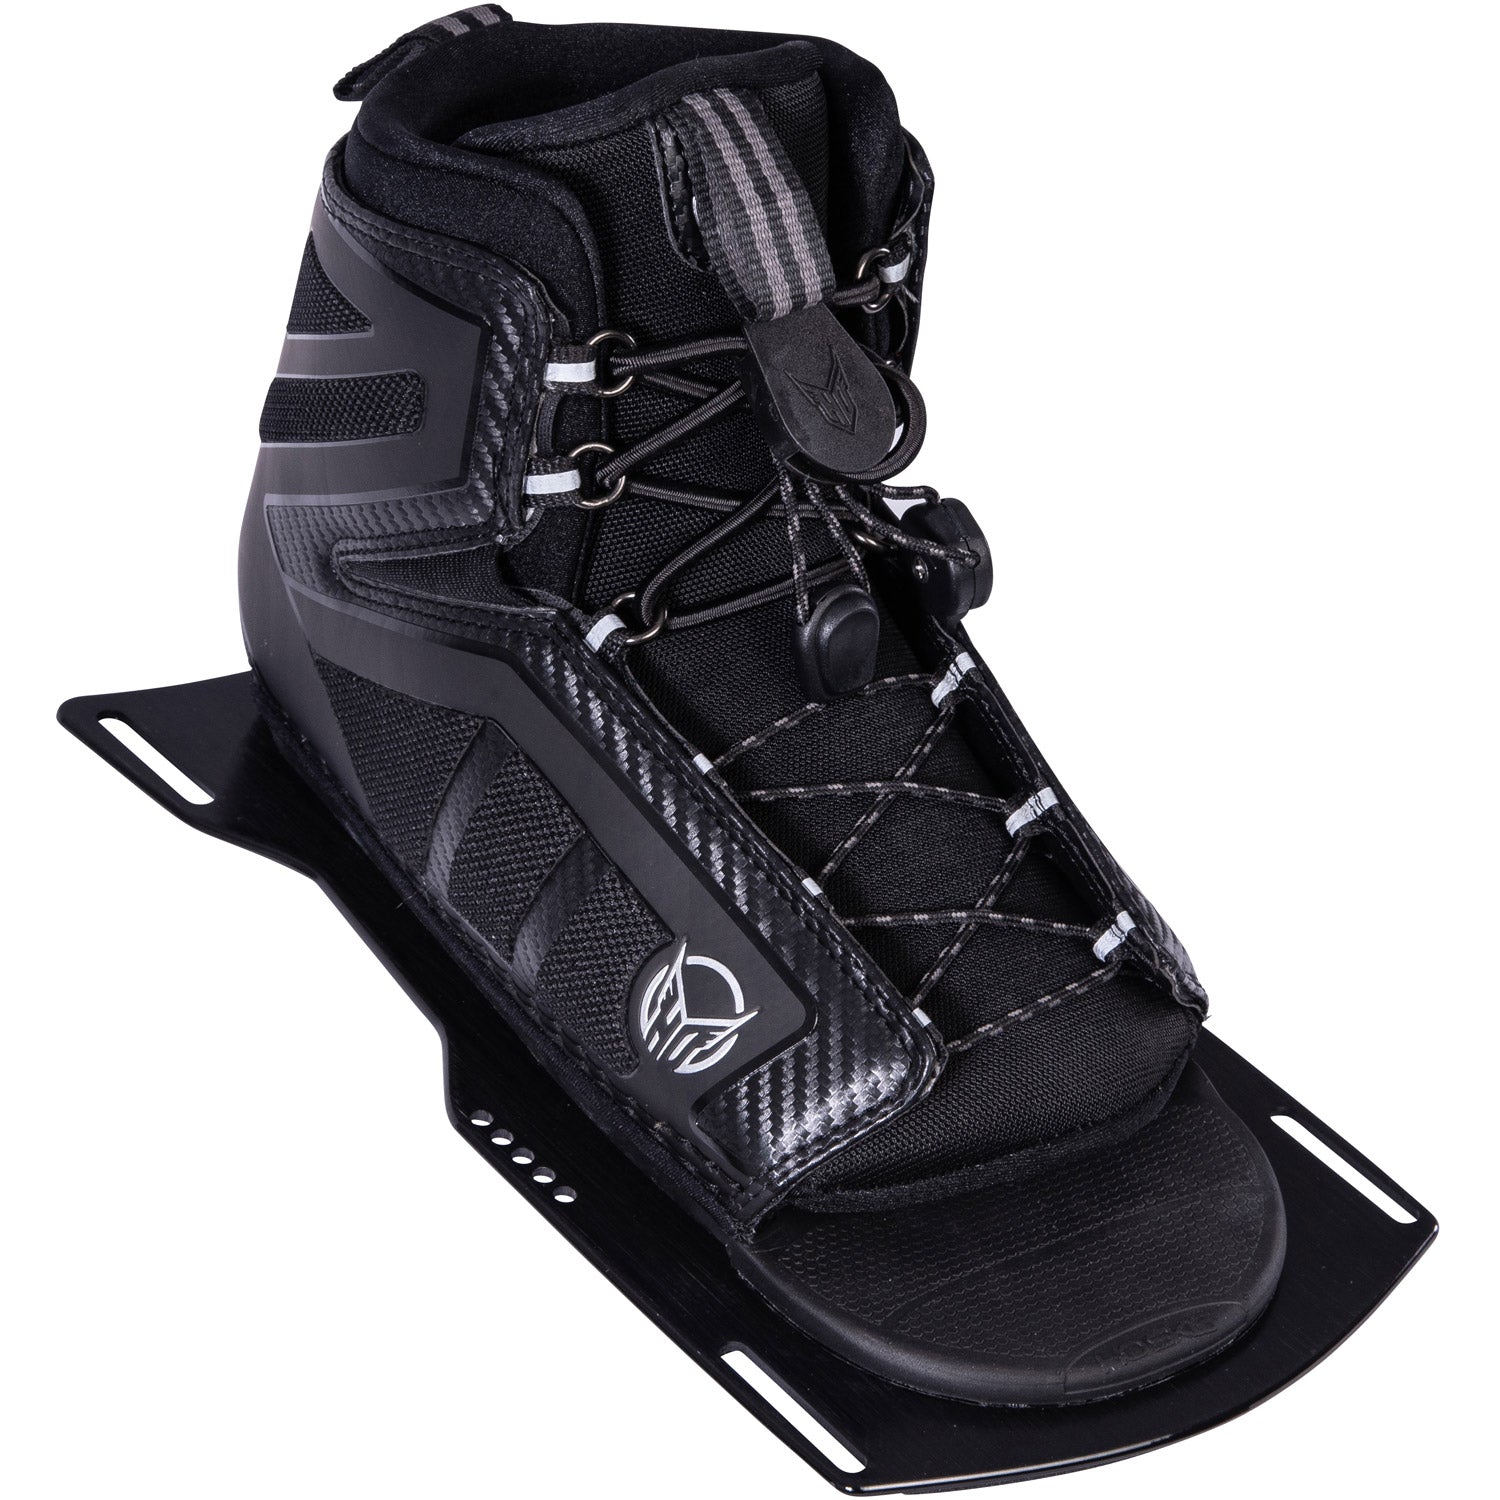 Stance 130 Slalom Ski Boot